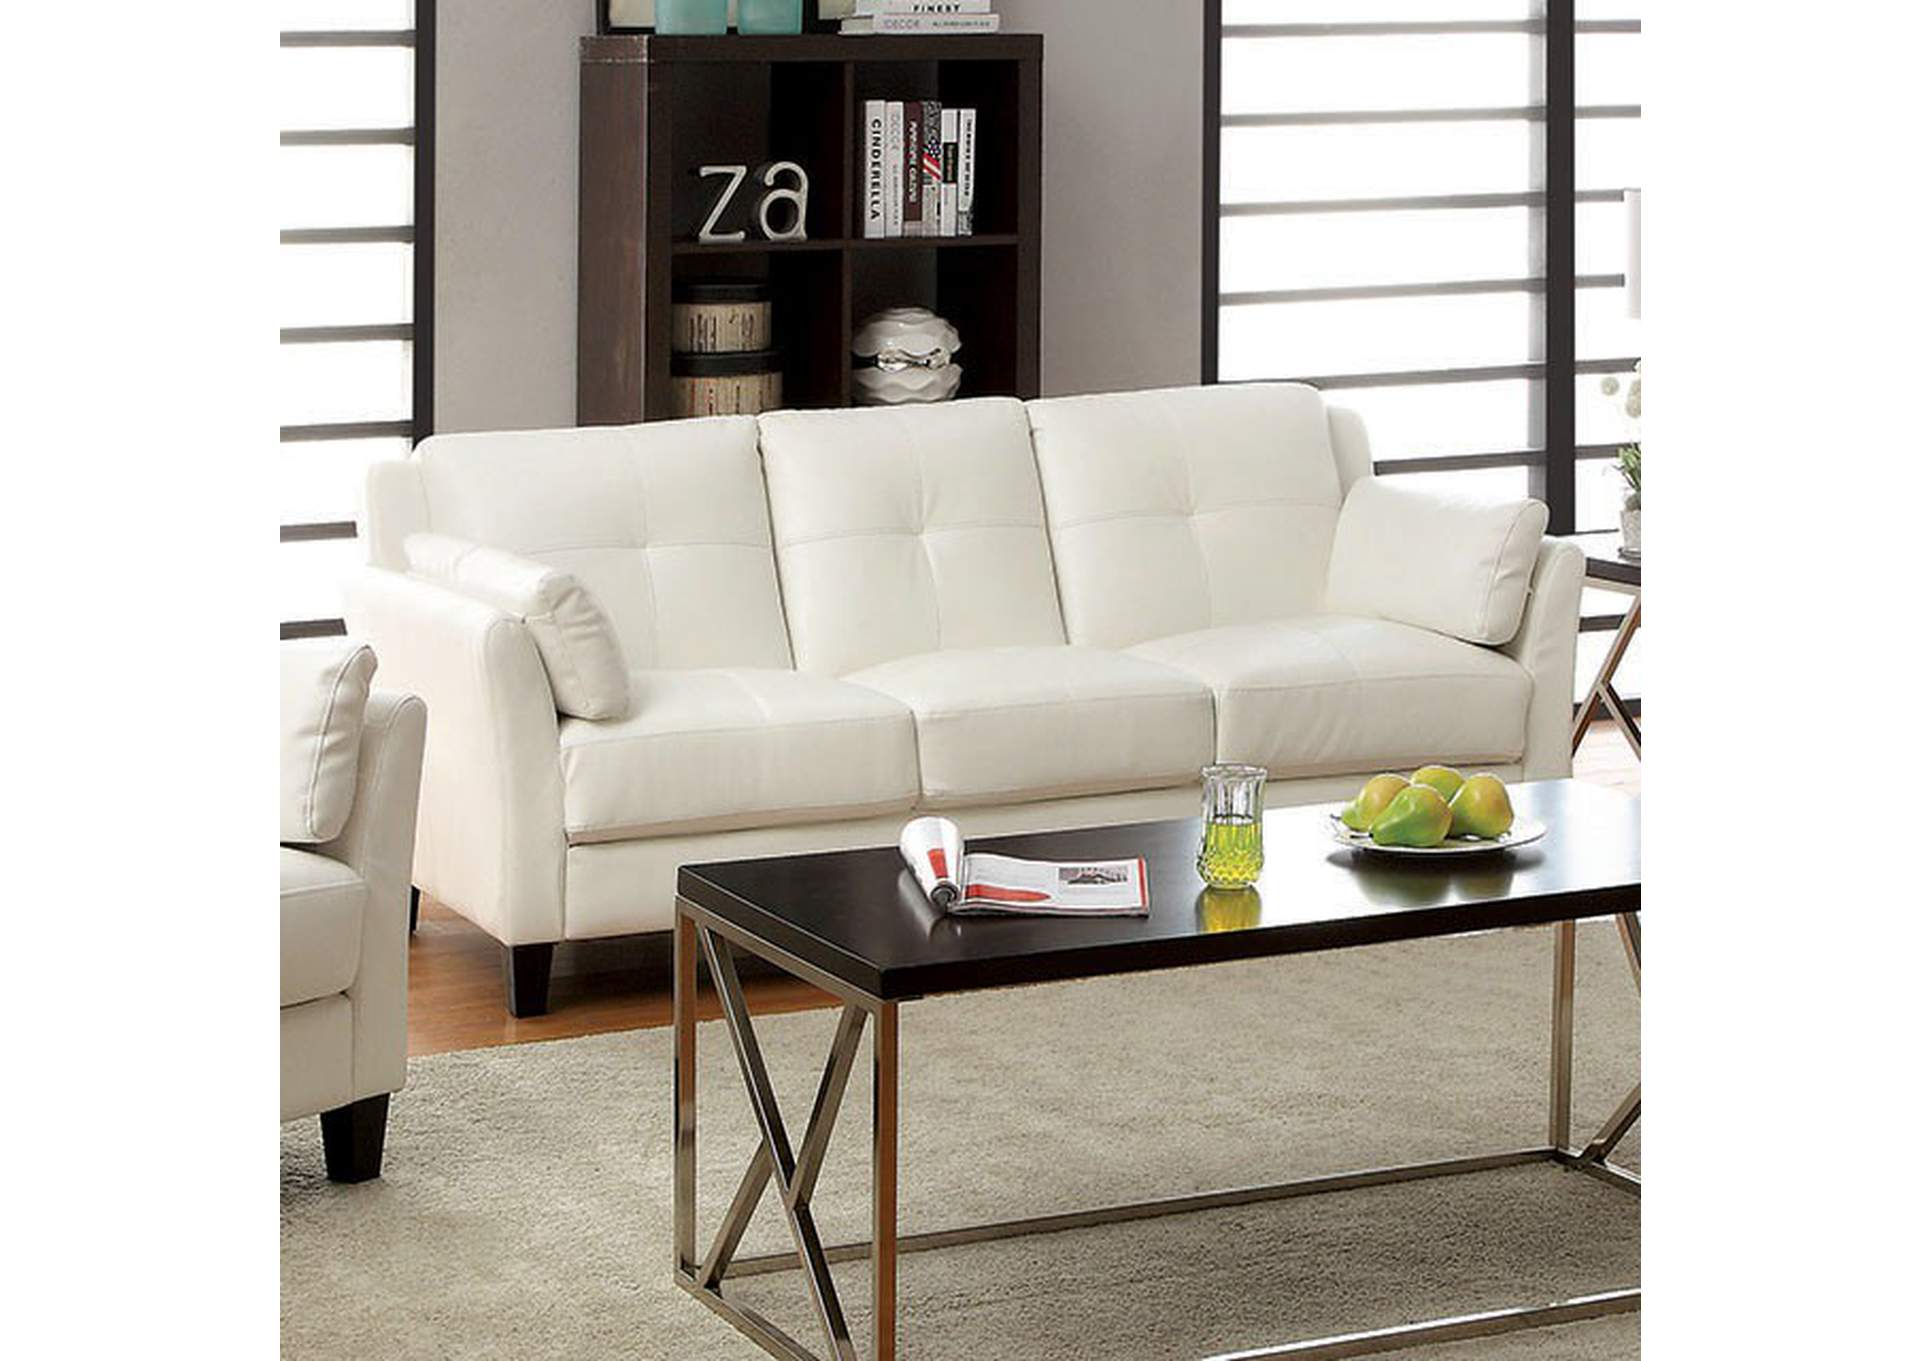 Pierre White Sofa,Furniture of America